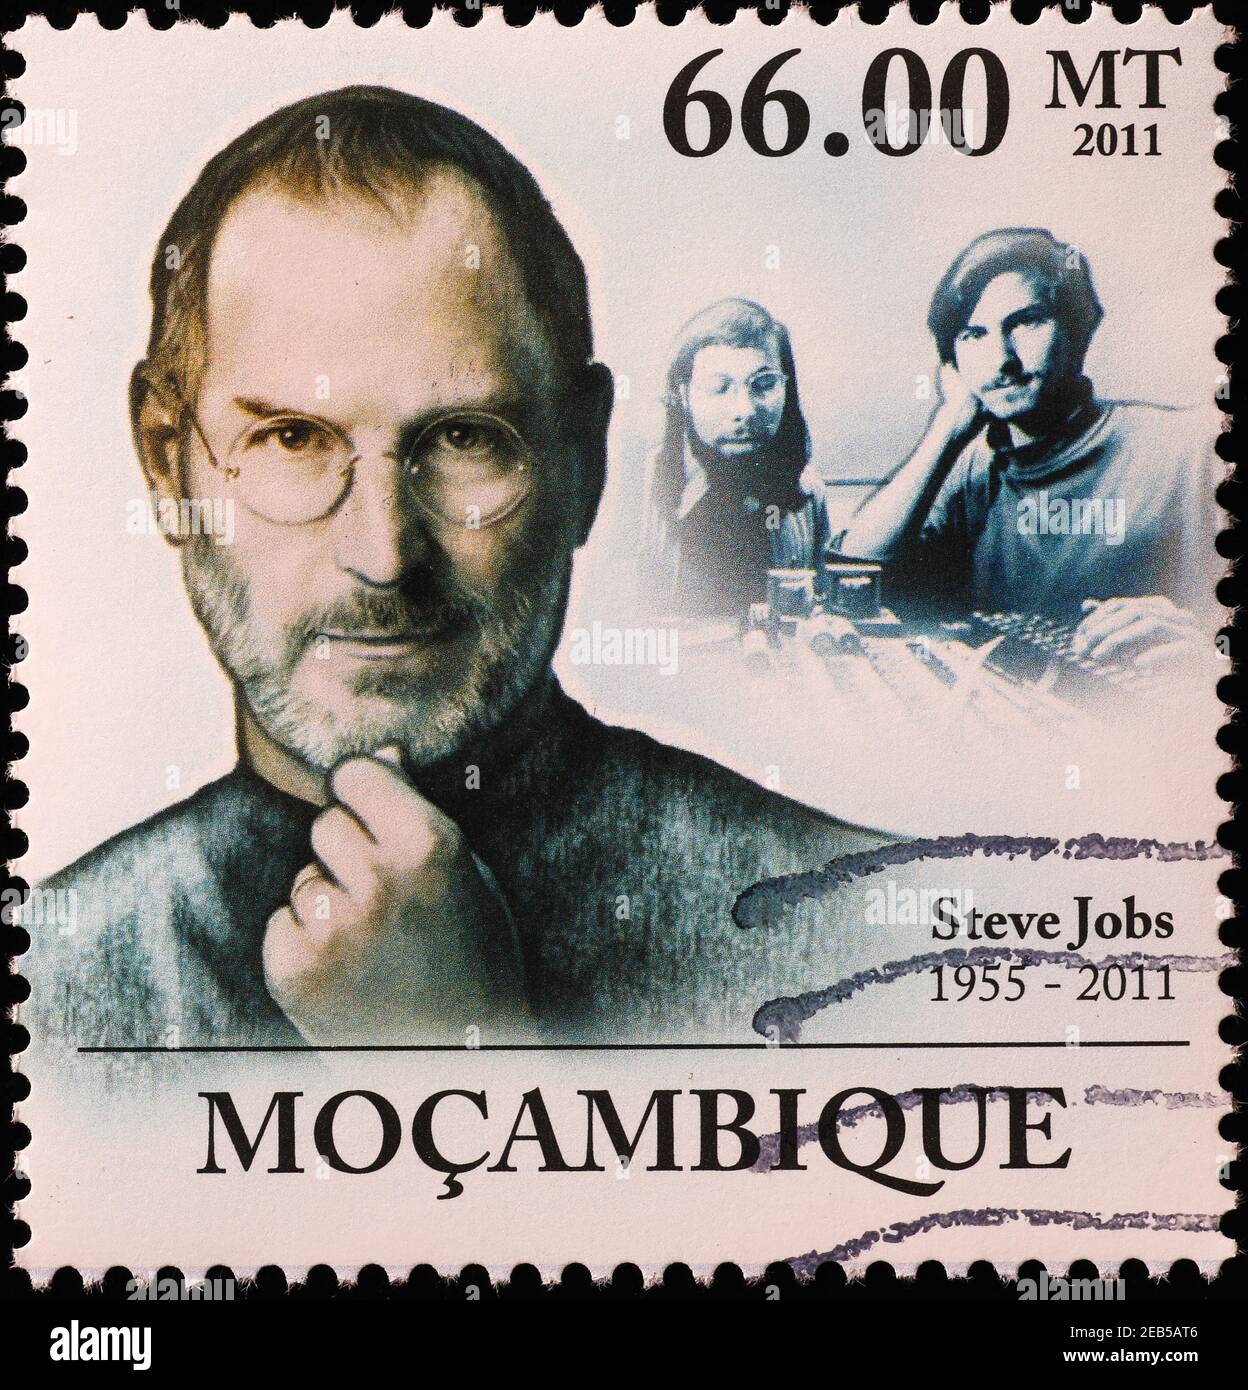 Steve Jobs portrait on african stamp Stock Photo